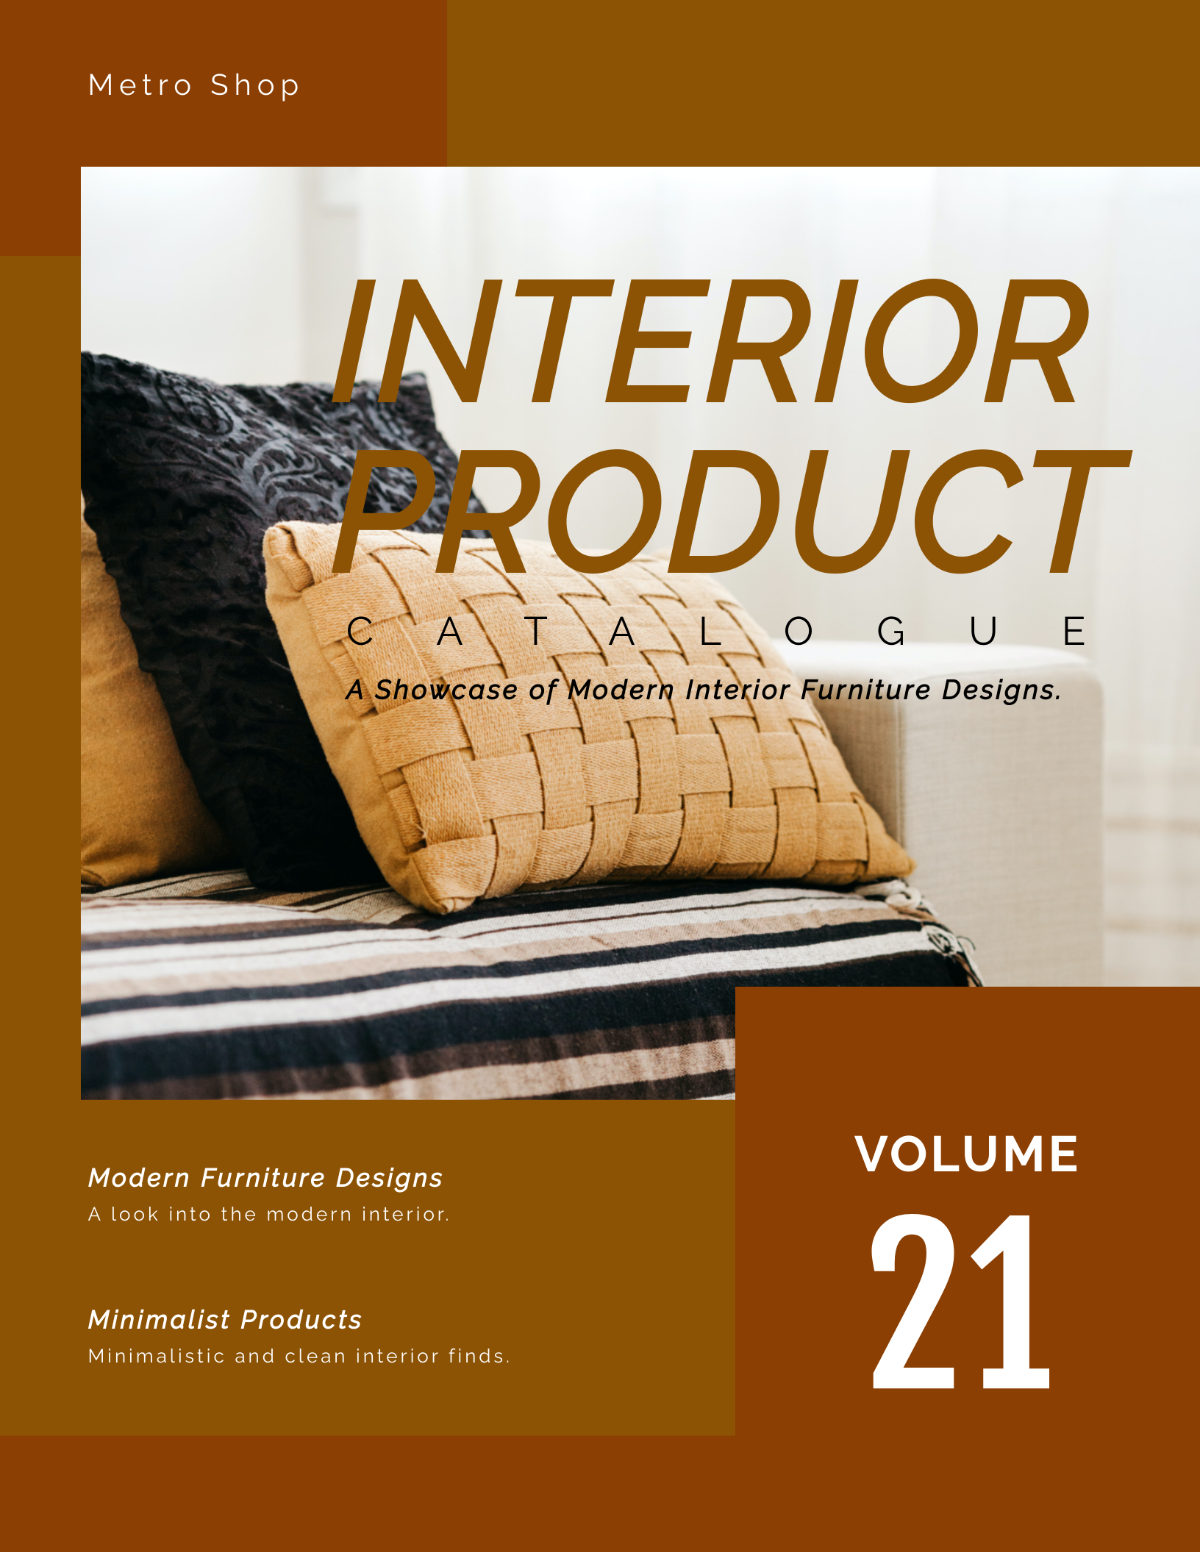 Interior Product Catalogue